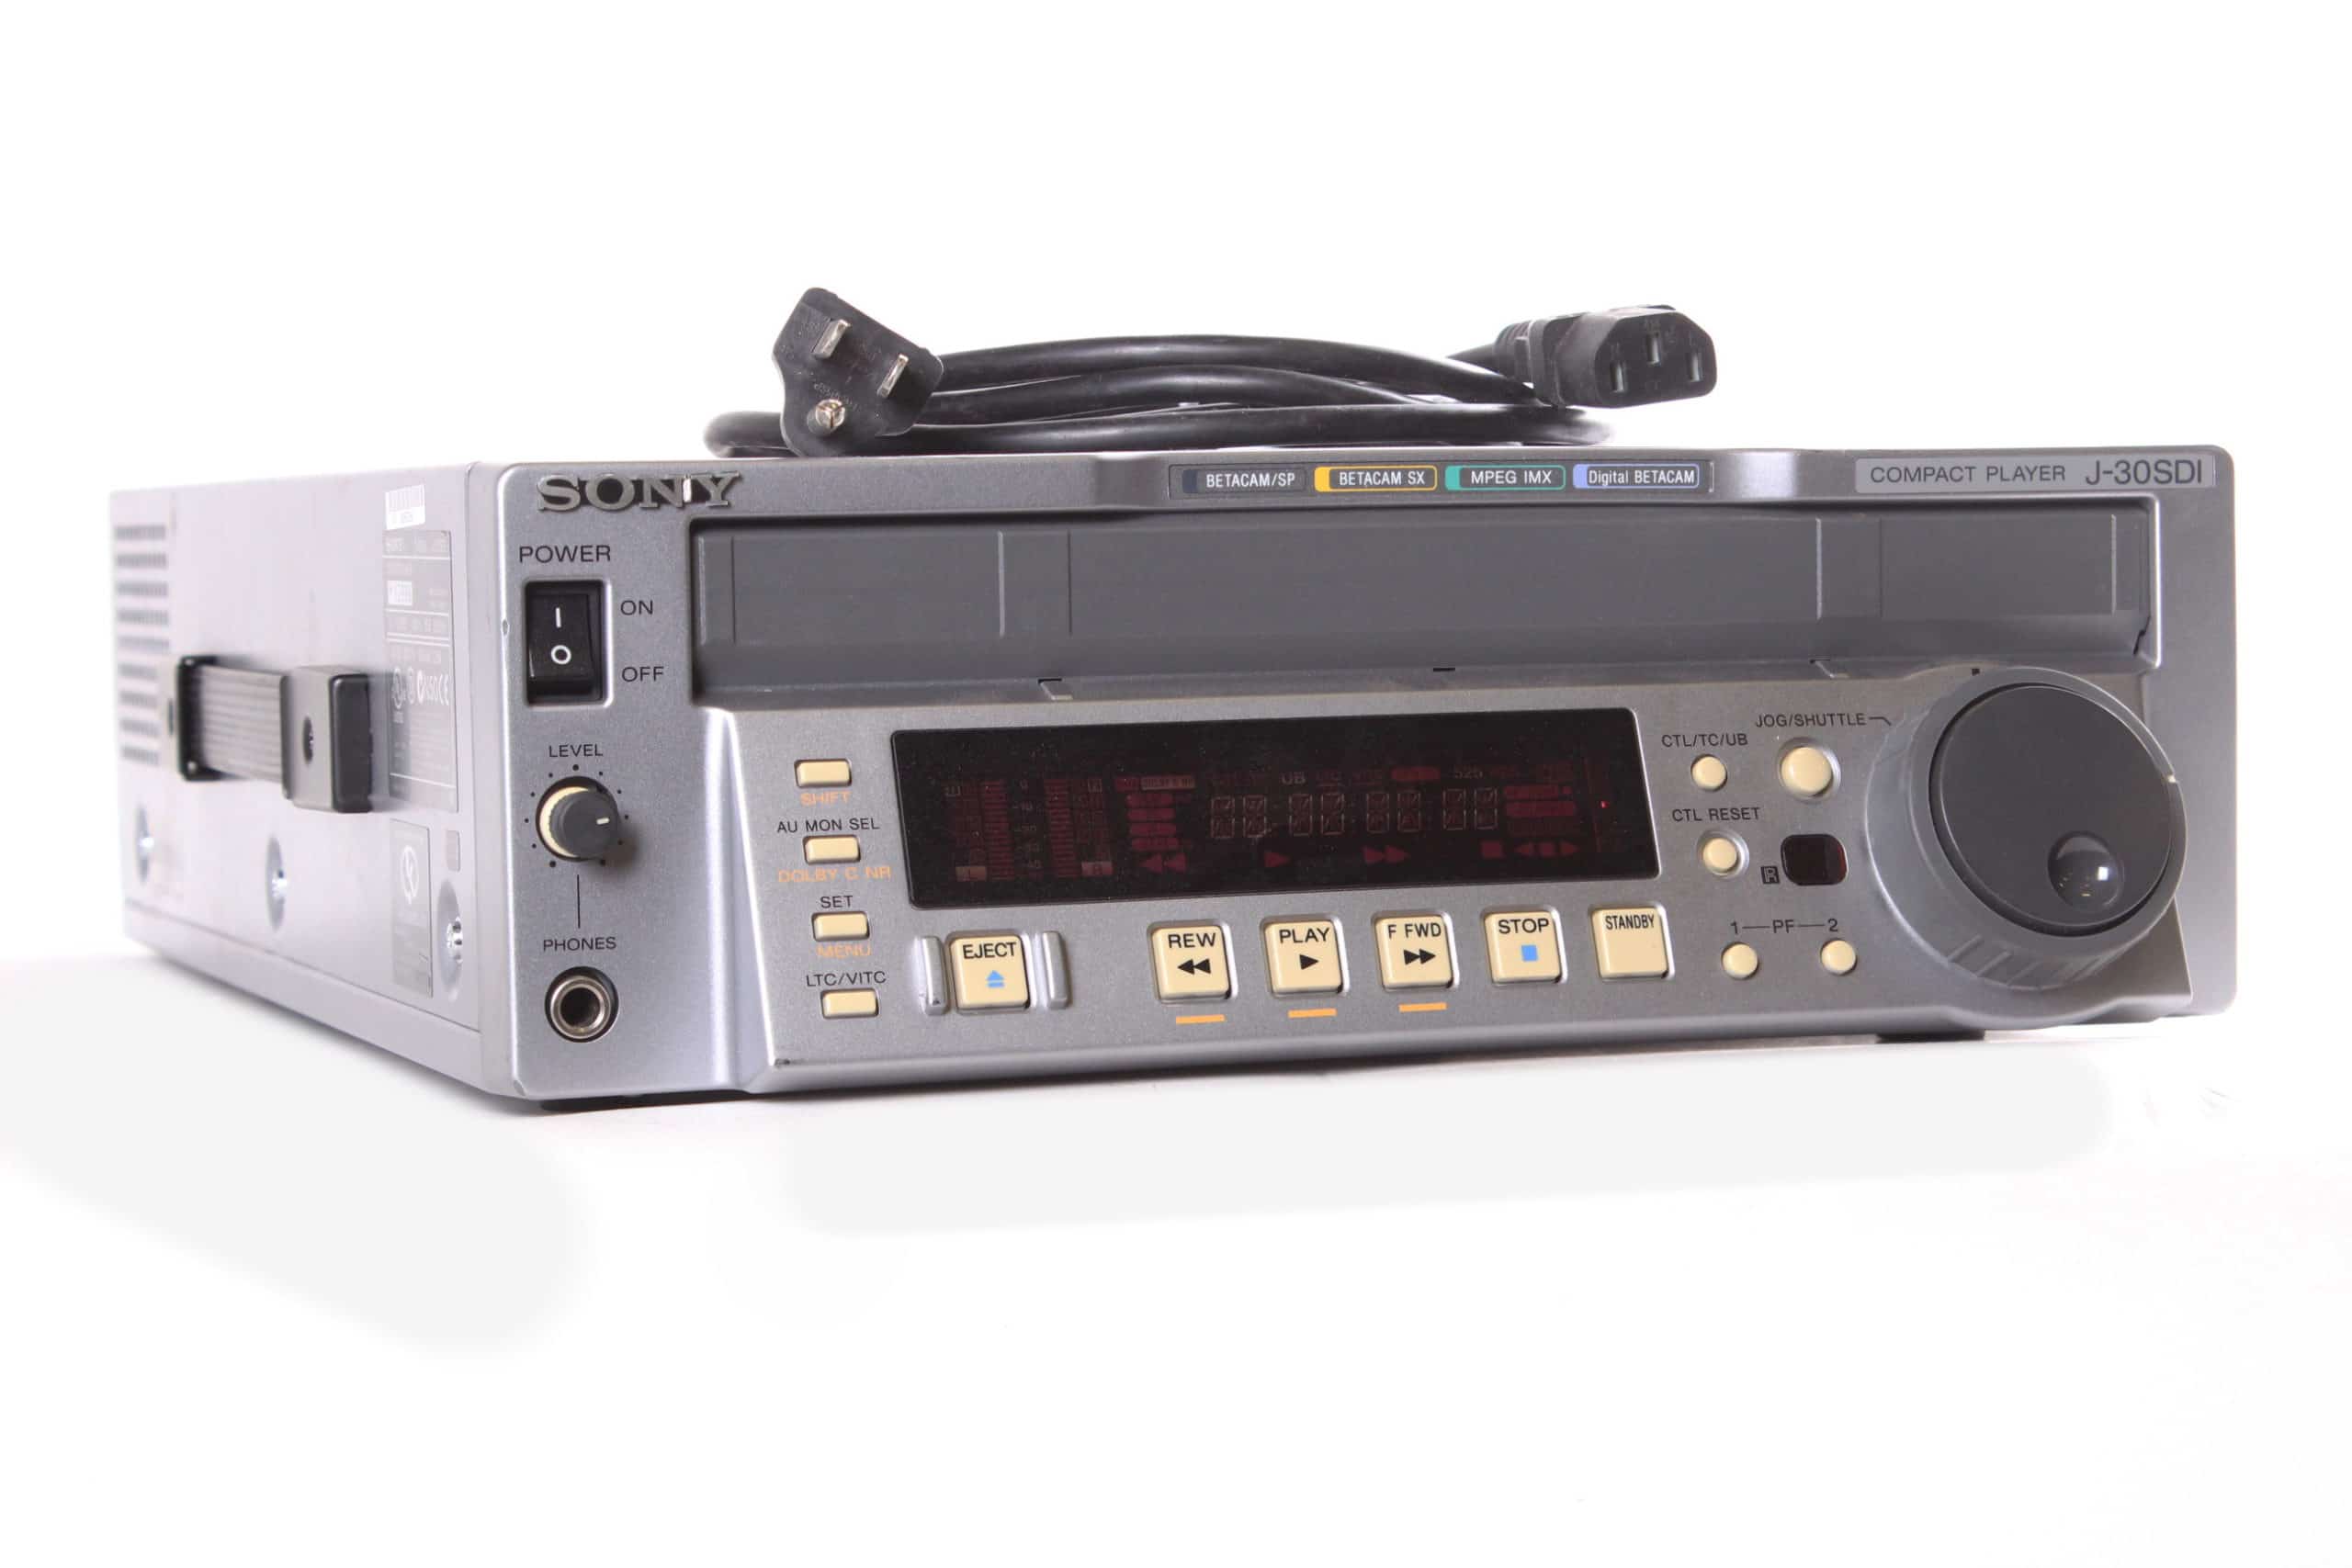 Sony J-30SDI Digital Compact Video Player (Tape Error)